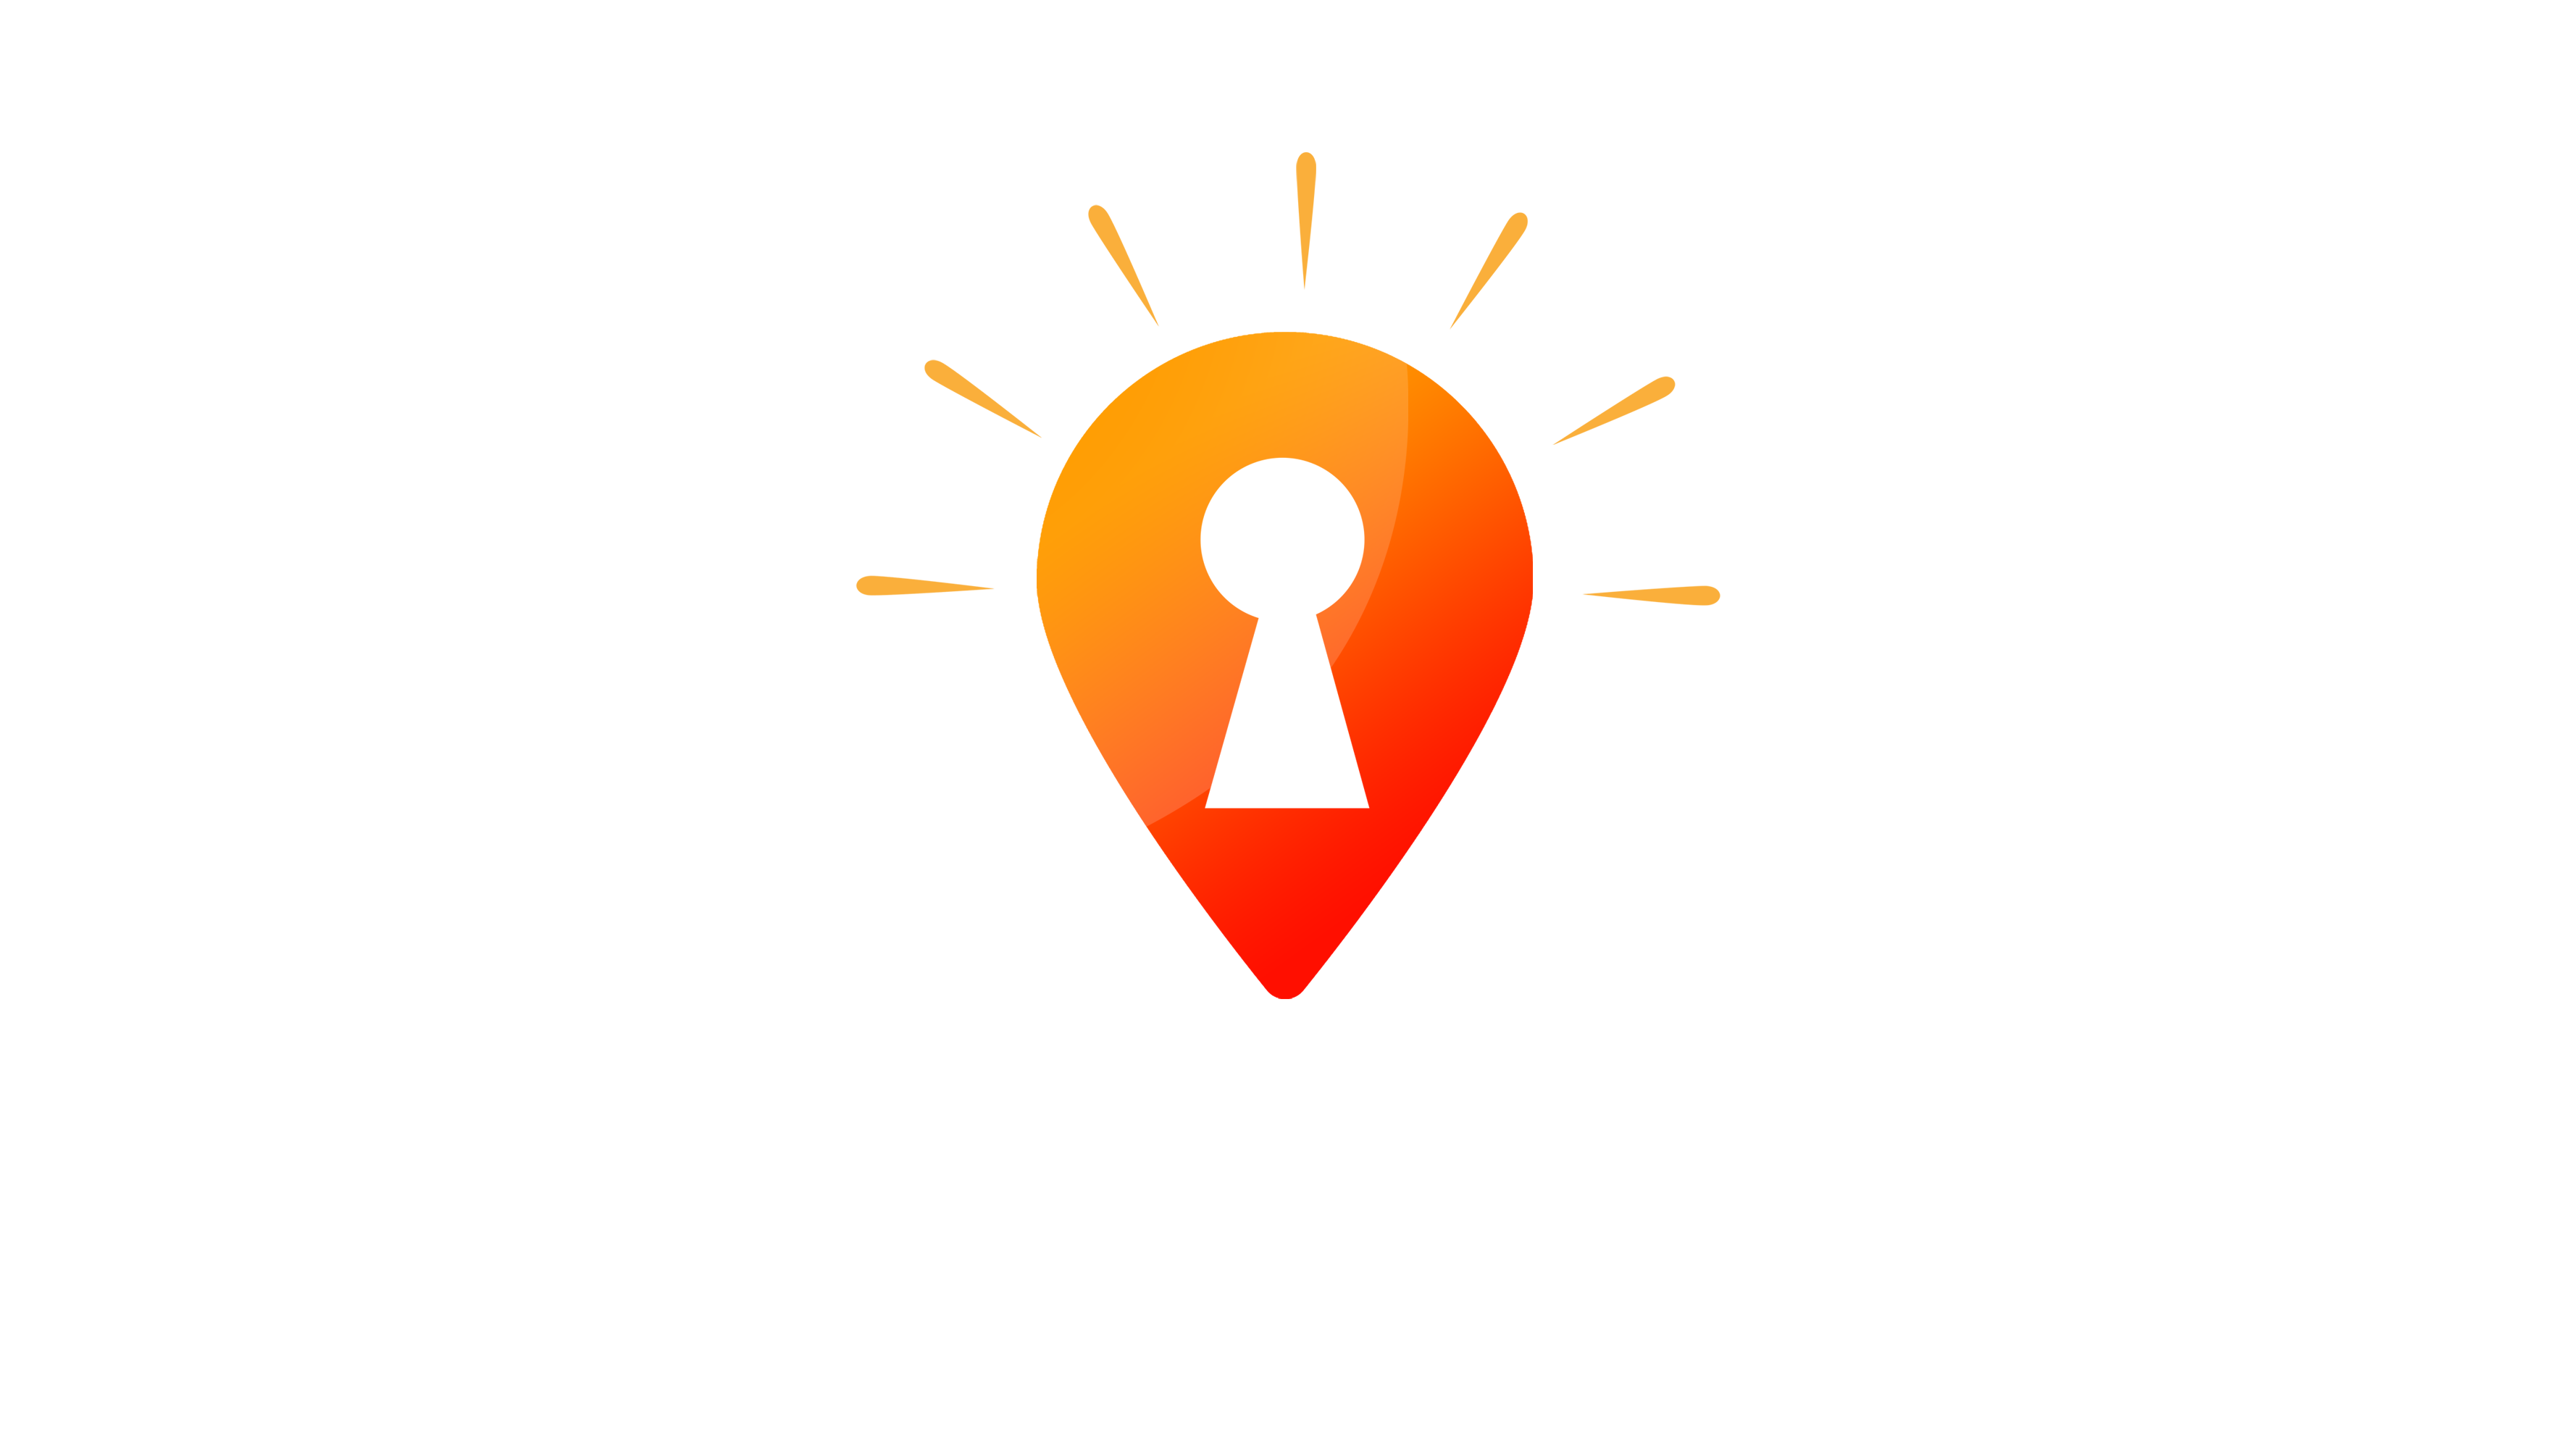 Sridhar properties